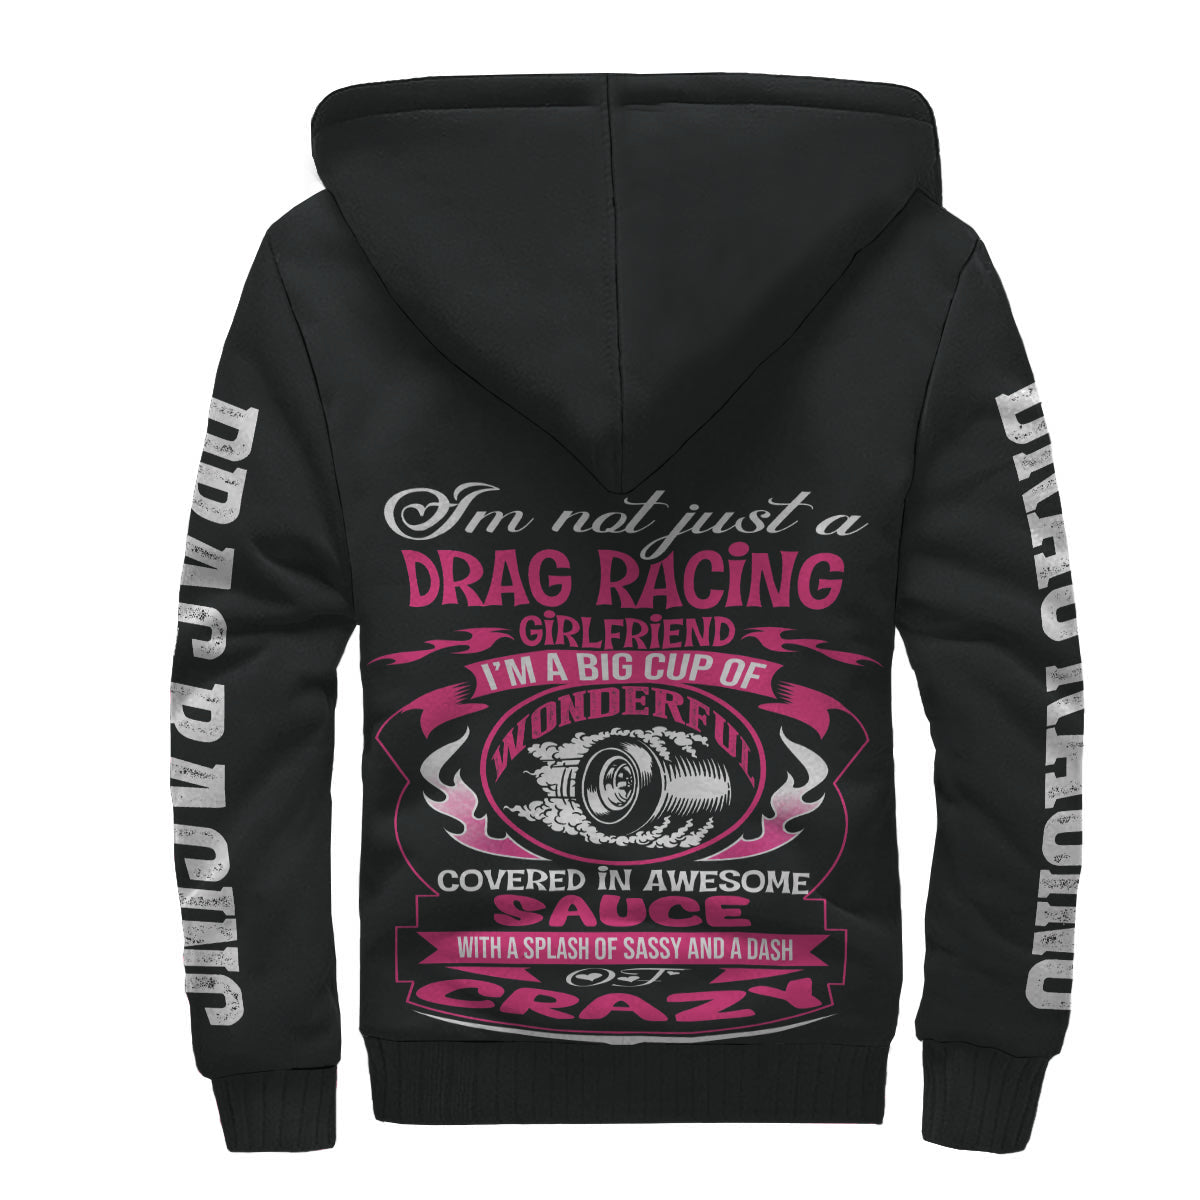 Drag racing sherpa jacket